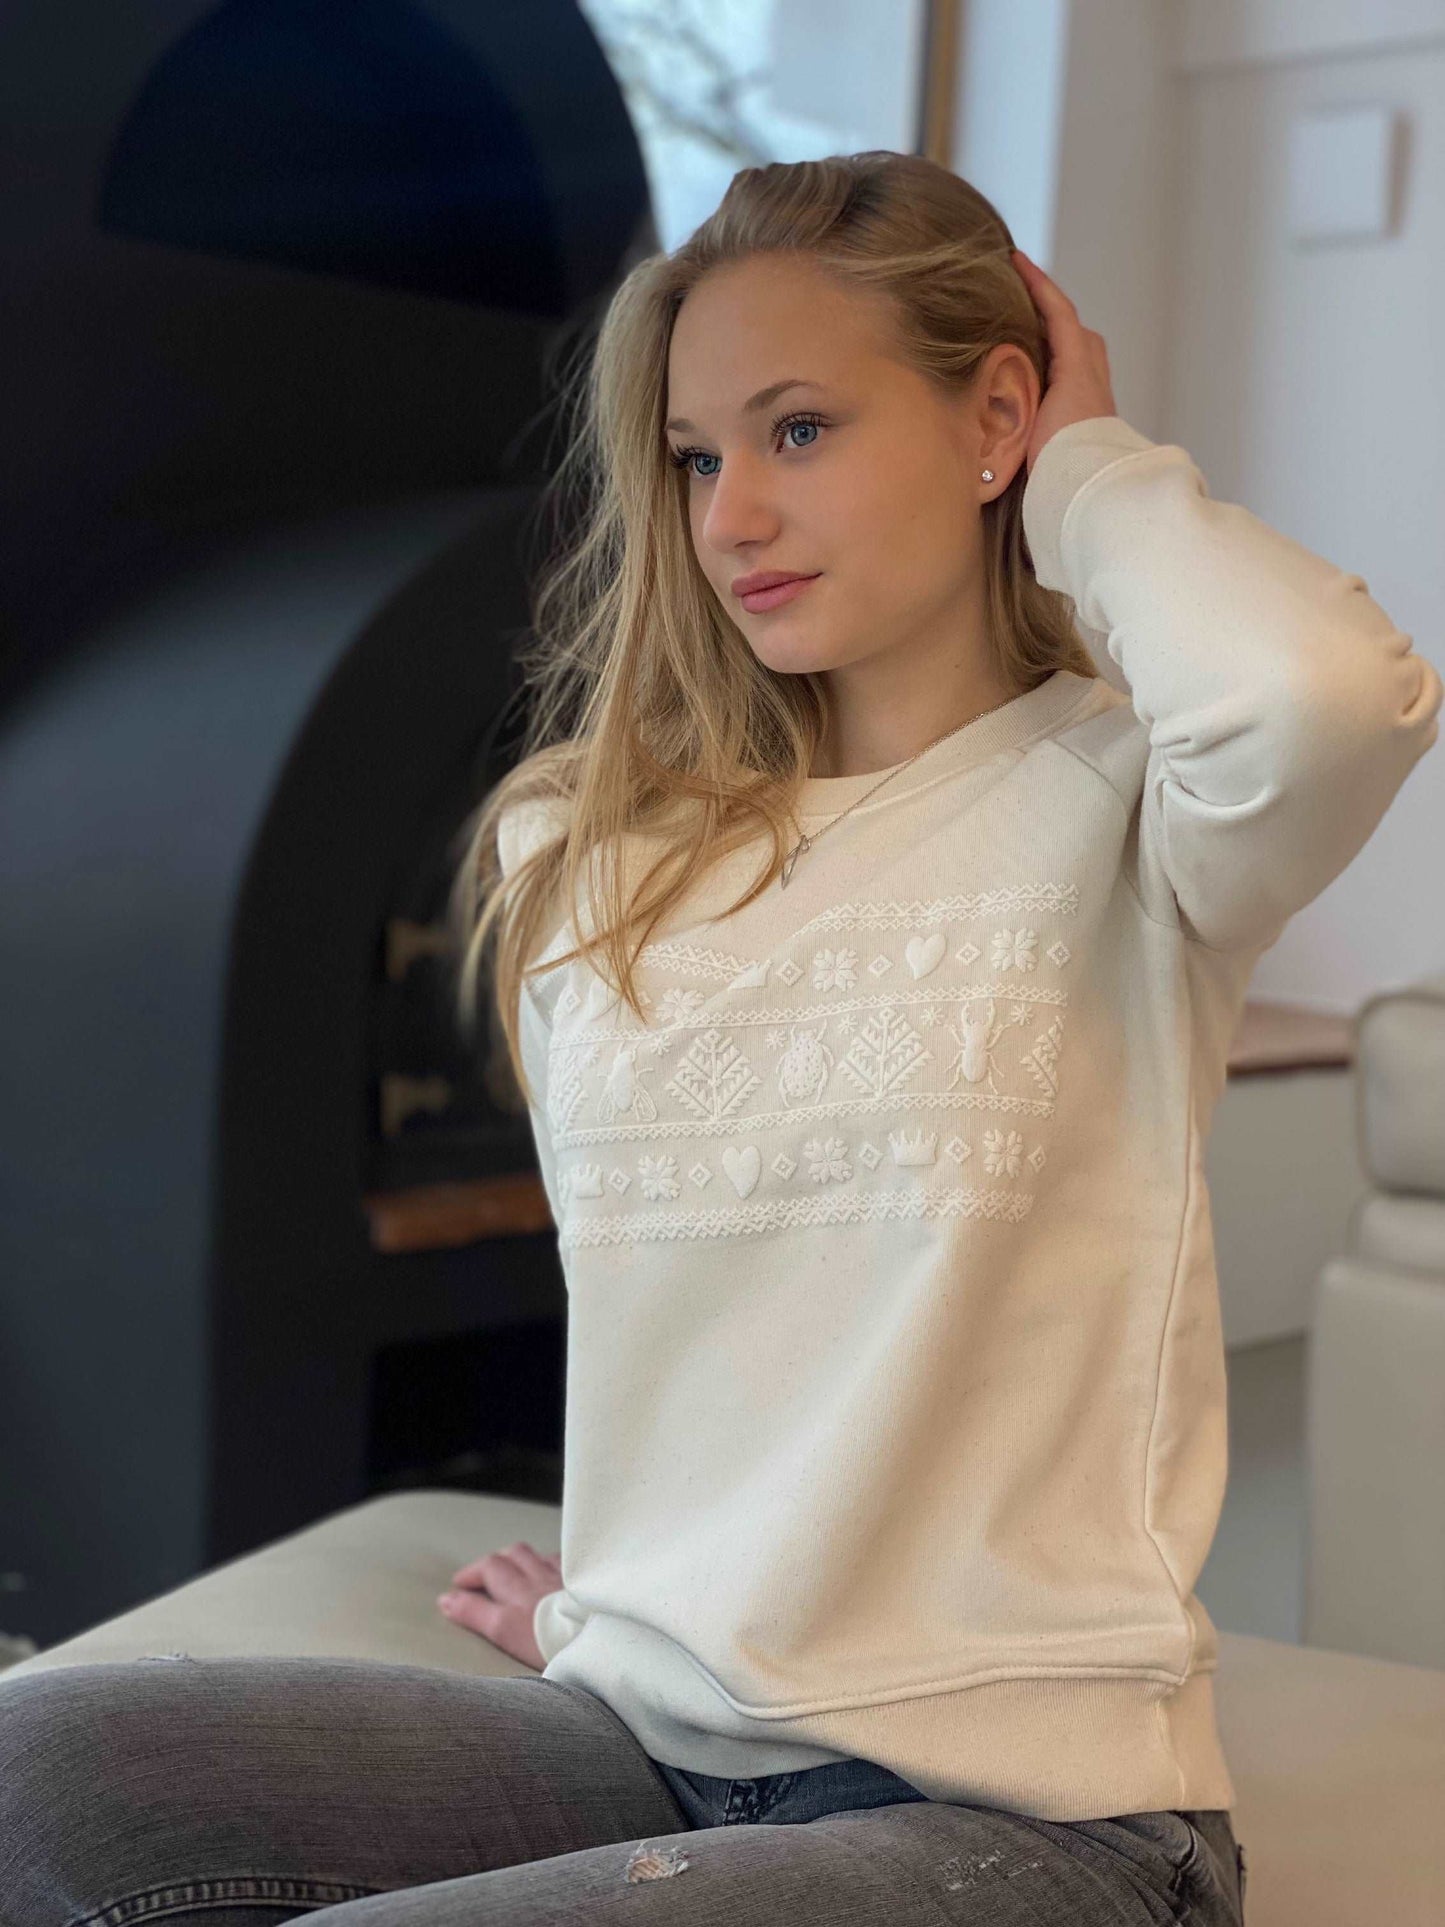 Pulover z norveškim vzorcem - ženski model